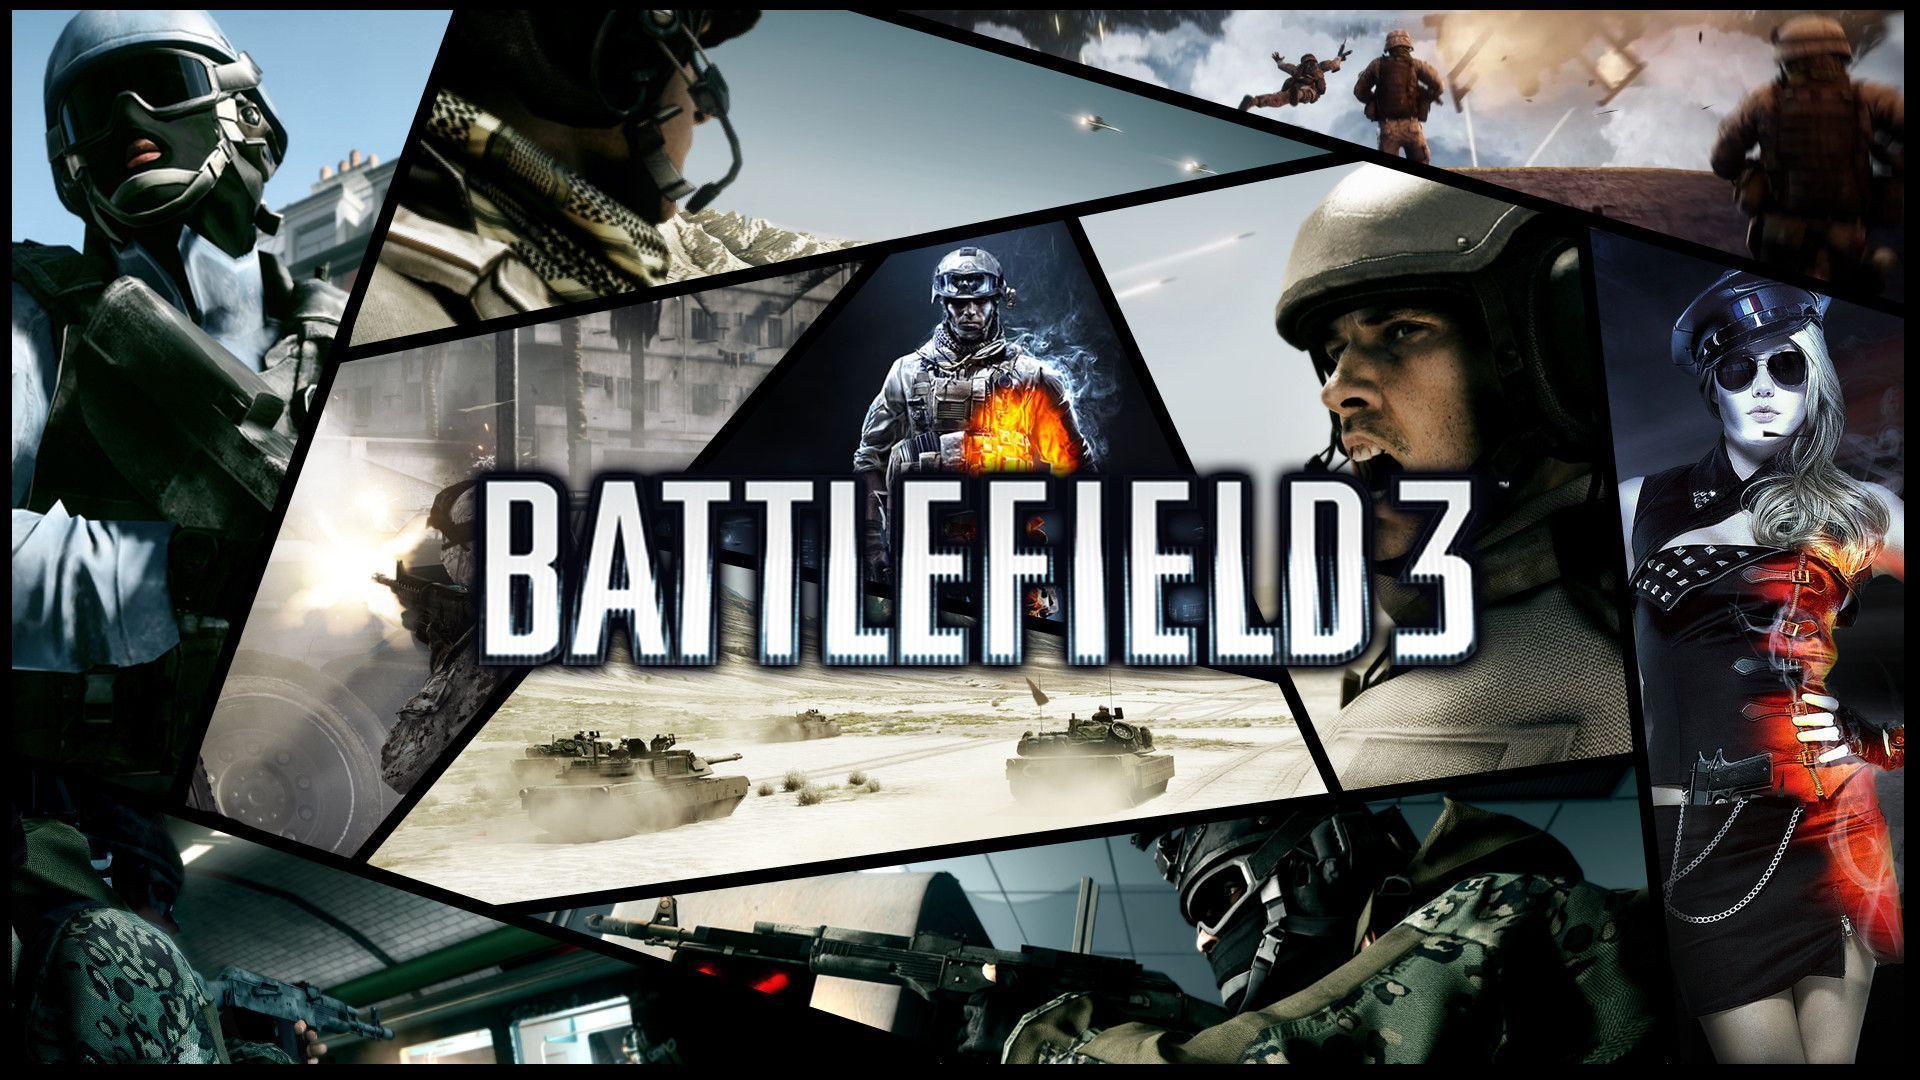 Battlefield 3 Wallpaper UK 1080p